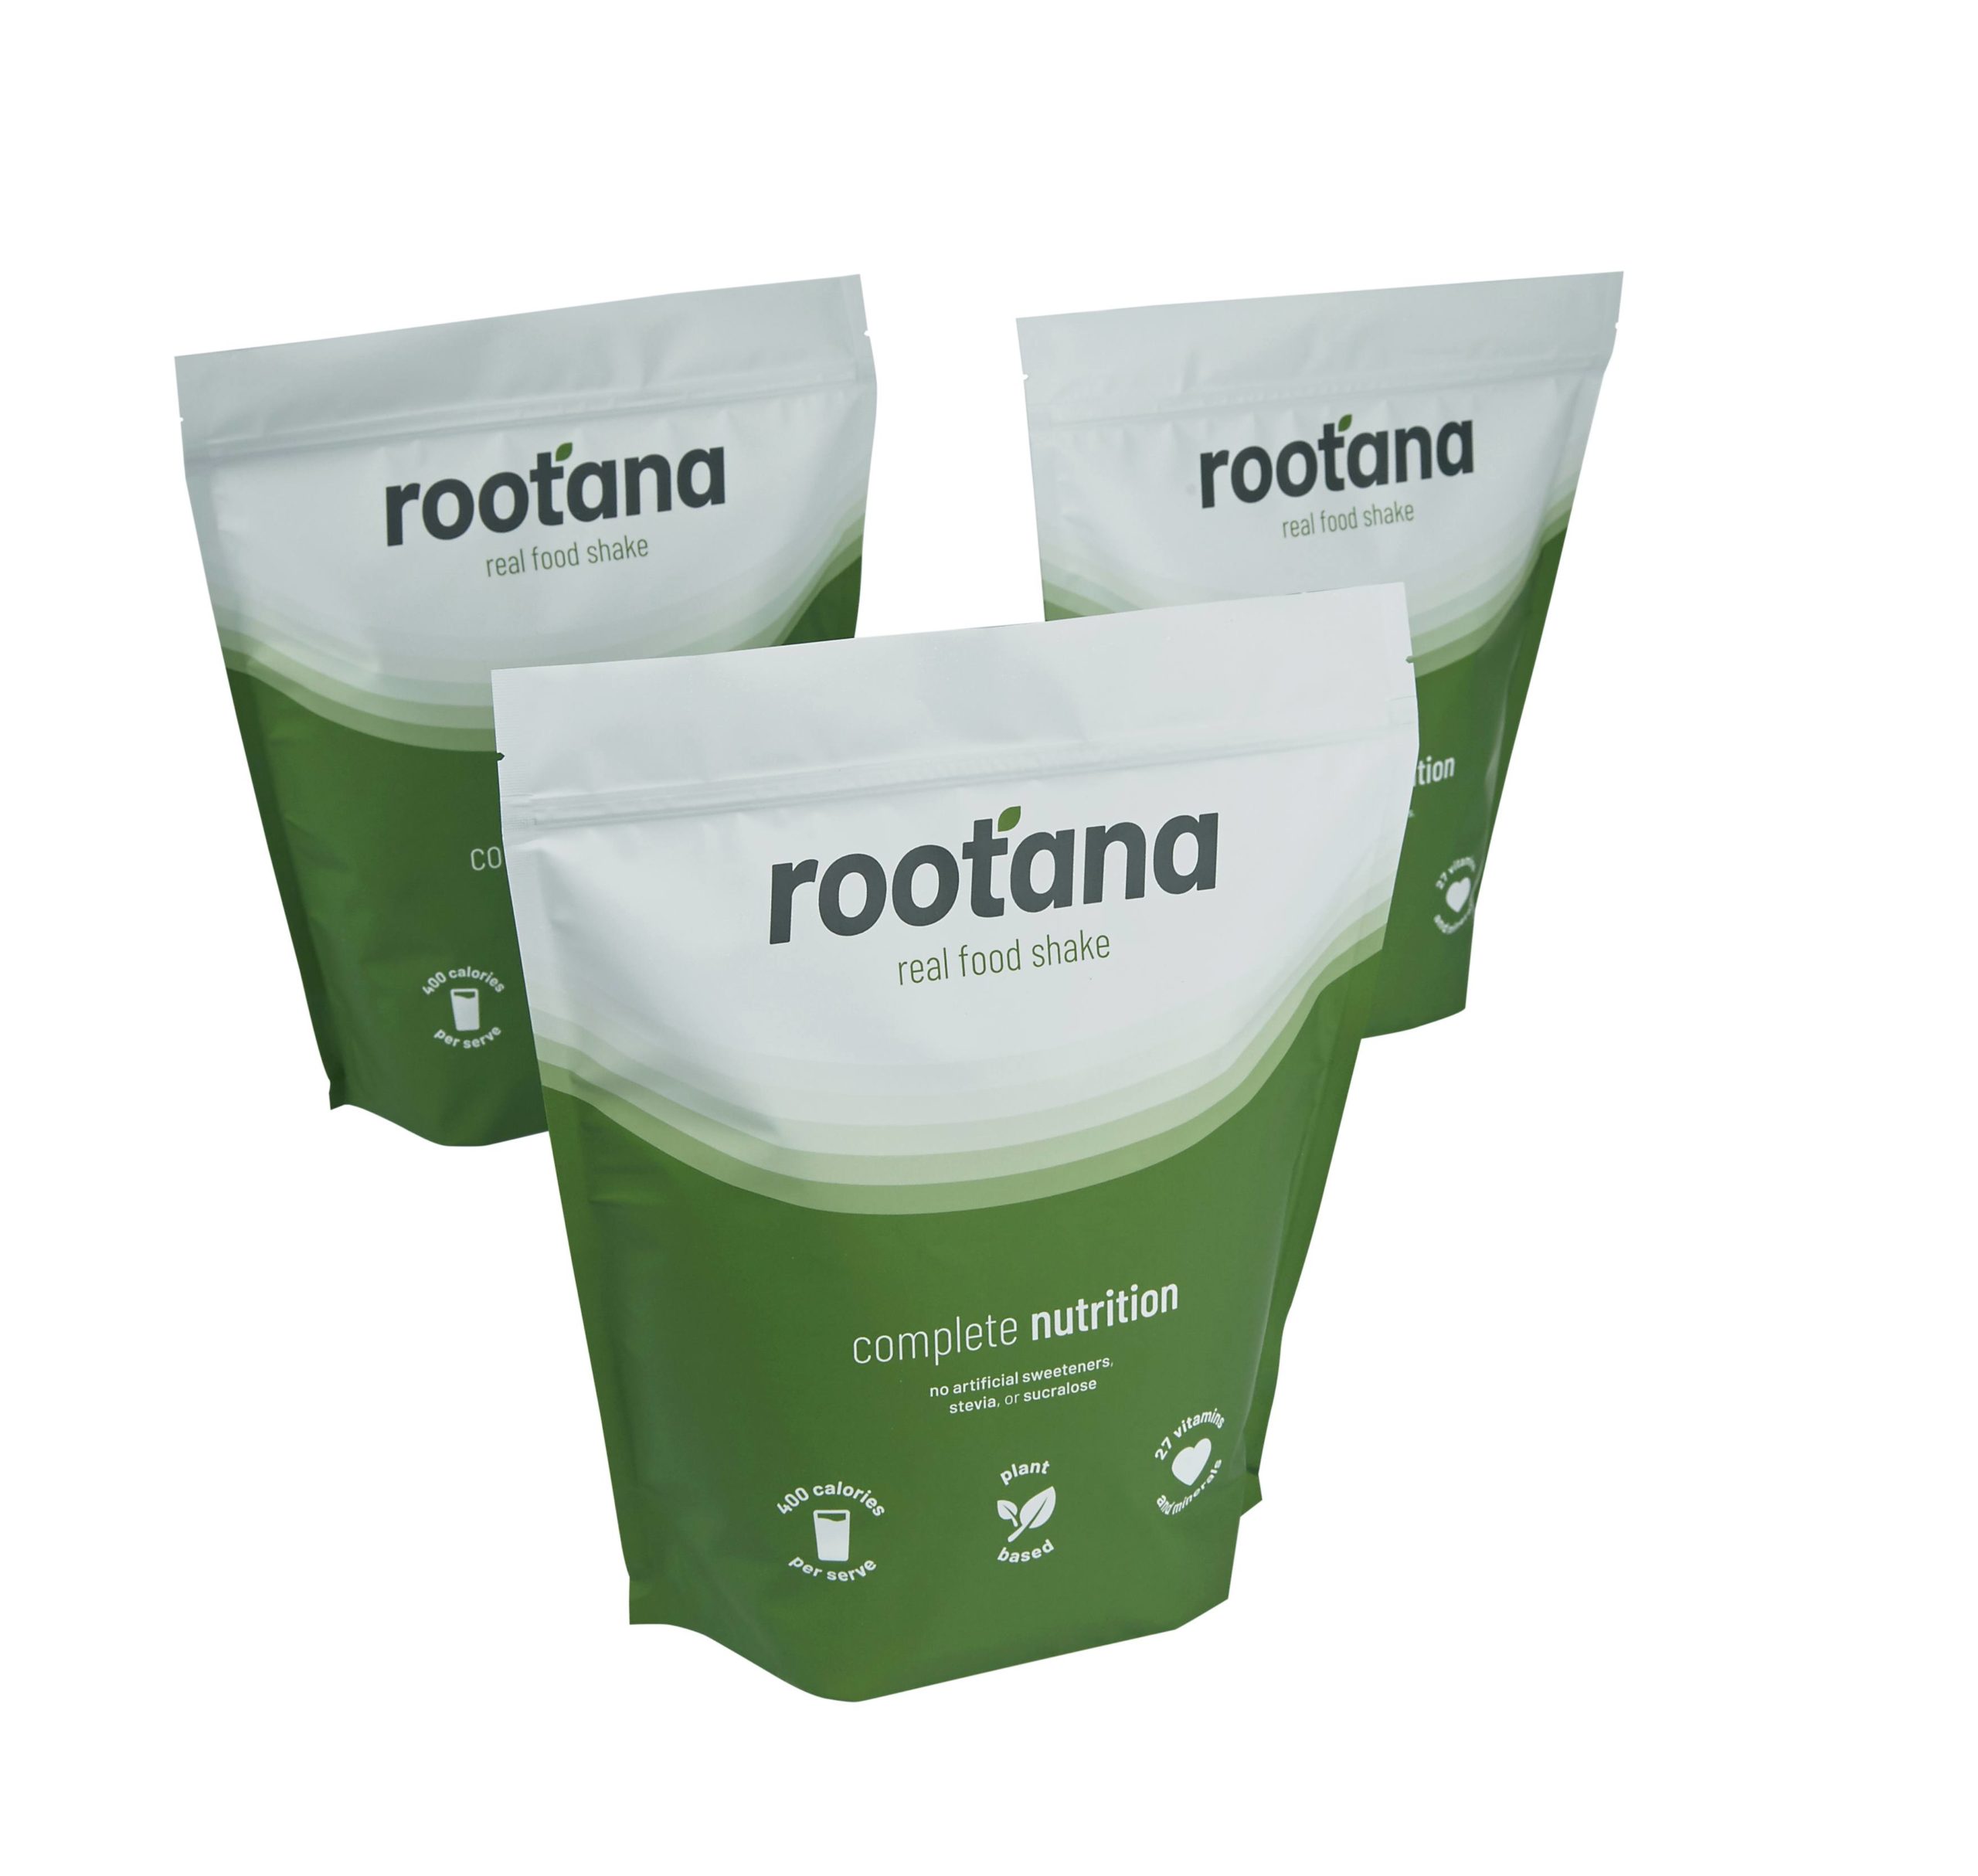 Rootana review